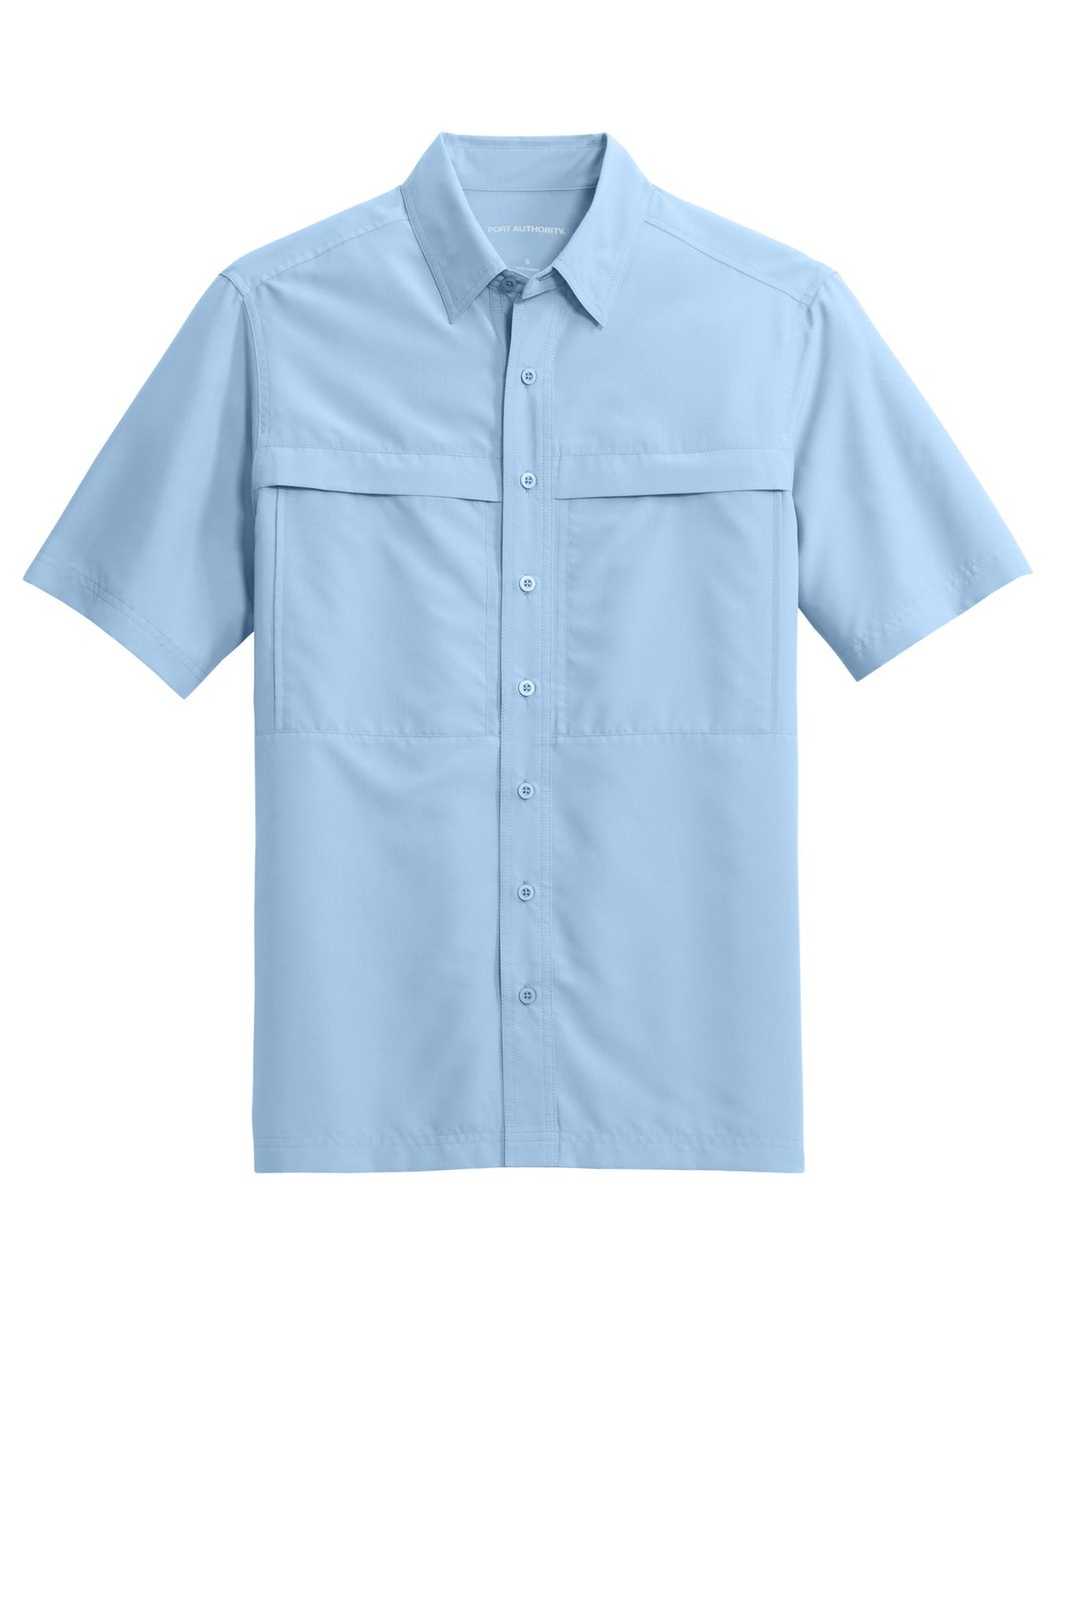 Port Authority W961 Short Sleeve UV Daybreak Shirt - Light Blue - HIT a Double - 2